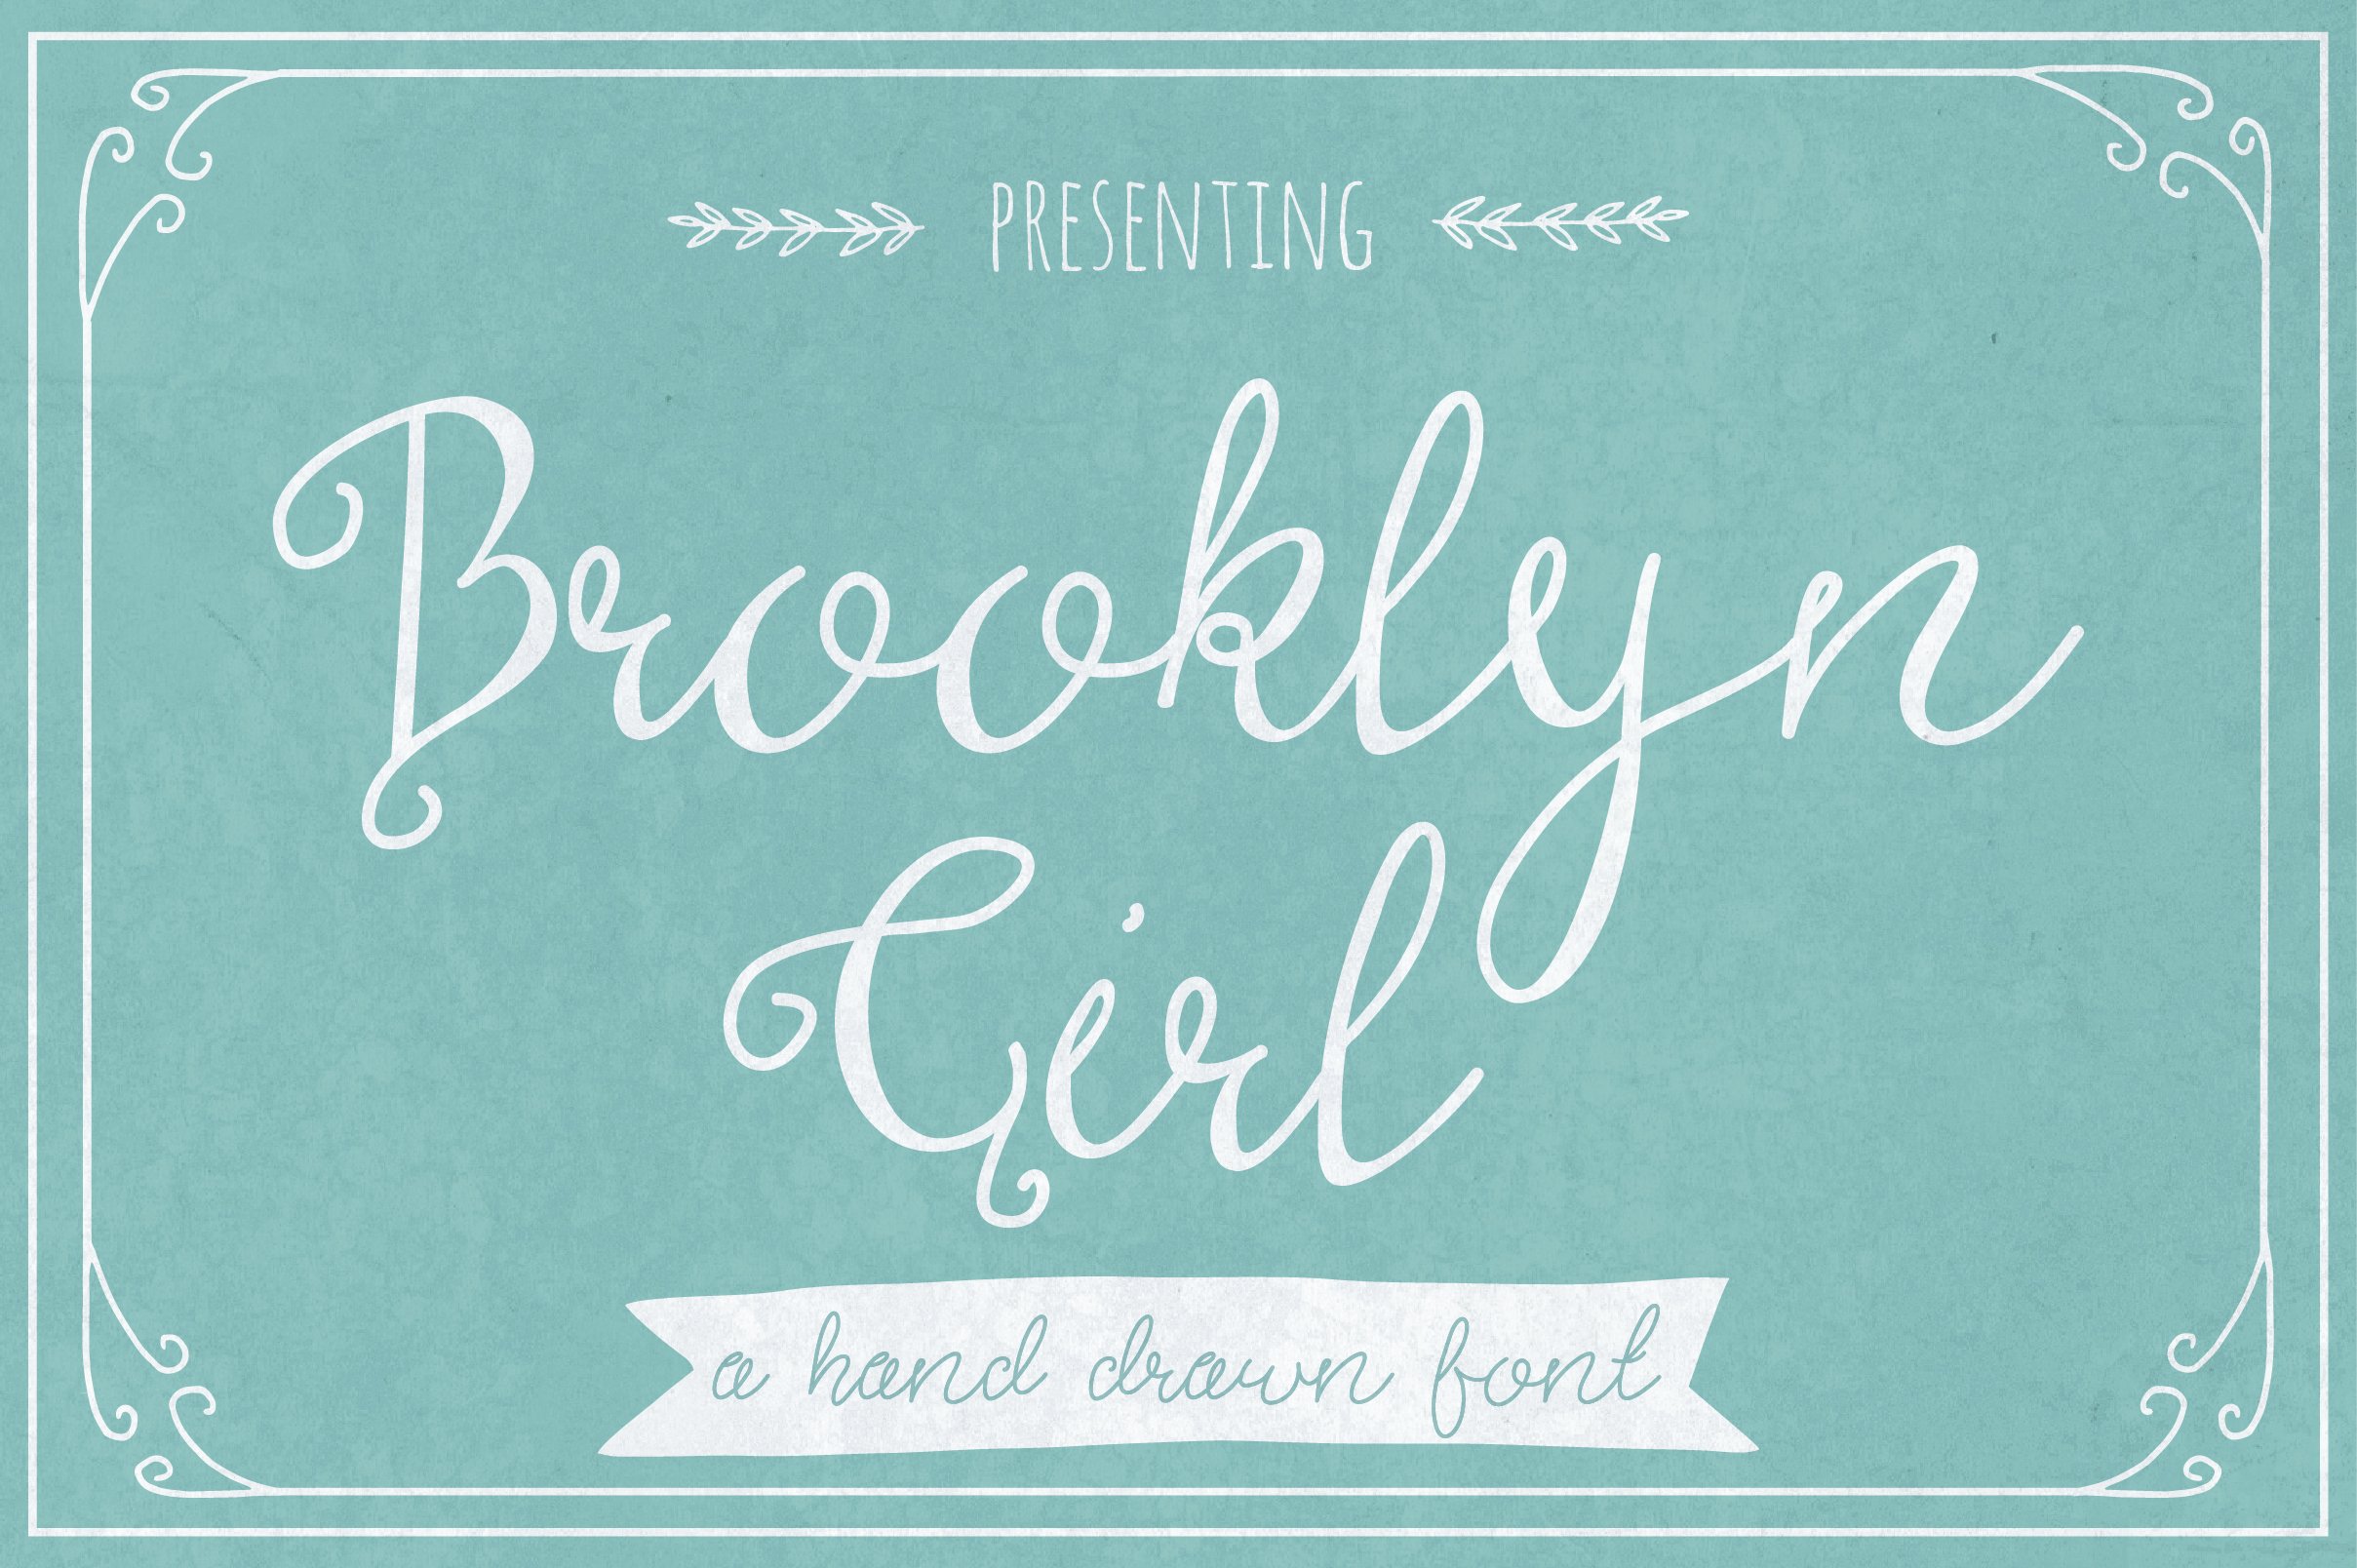 Brooklyn Girl cover image.